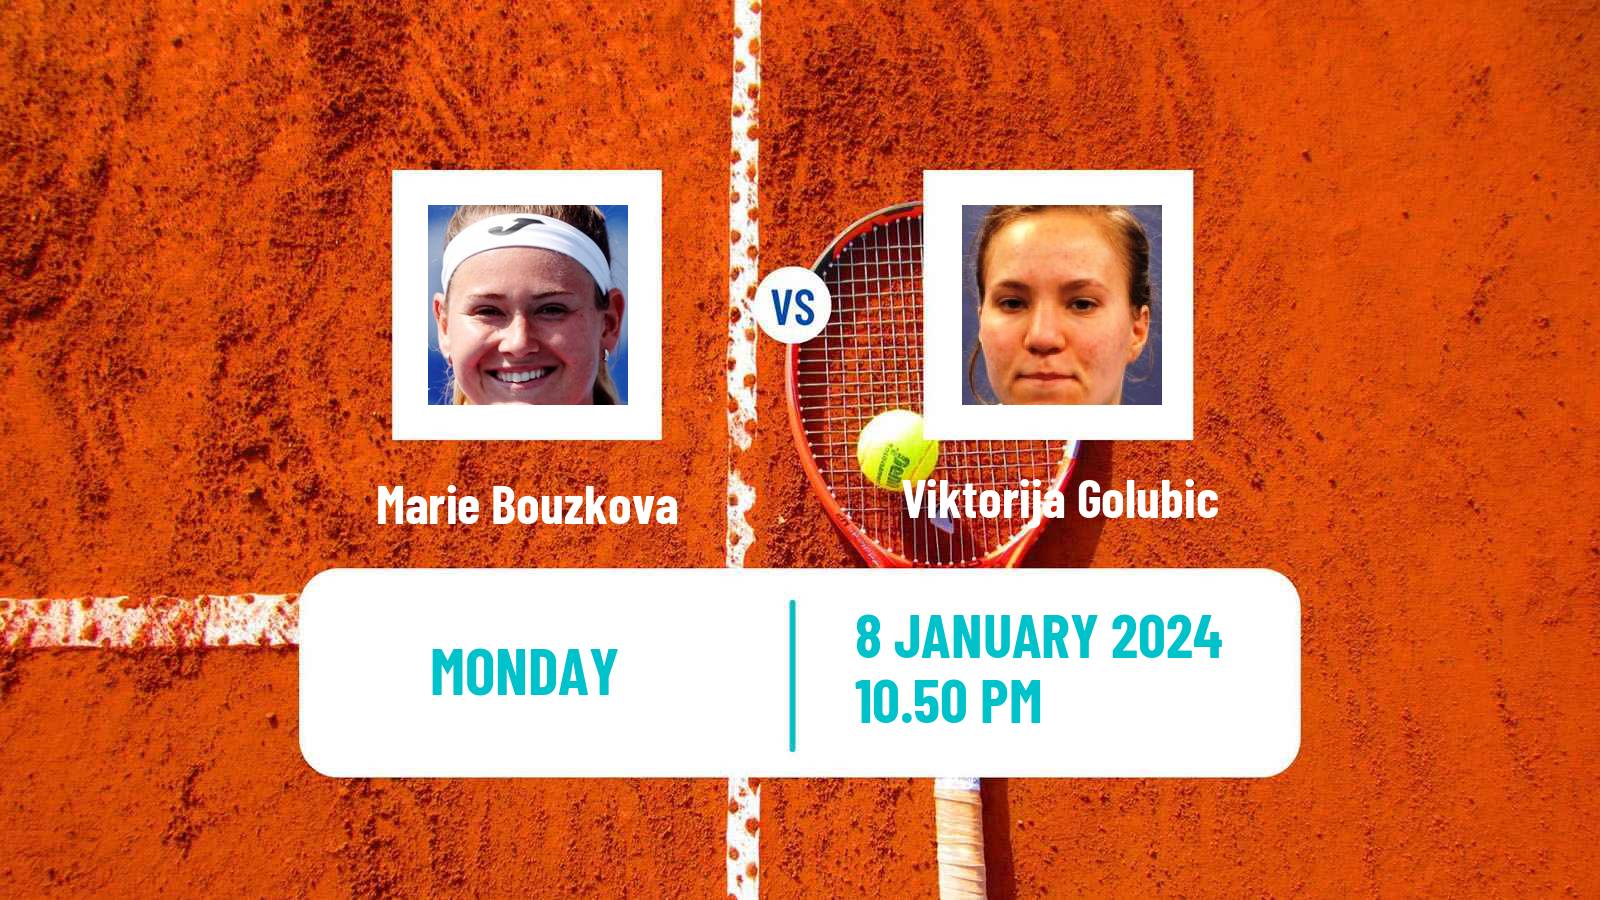 Tennis WTA Hobart Marie Bouzkova - Viktorija Golubic